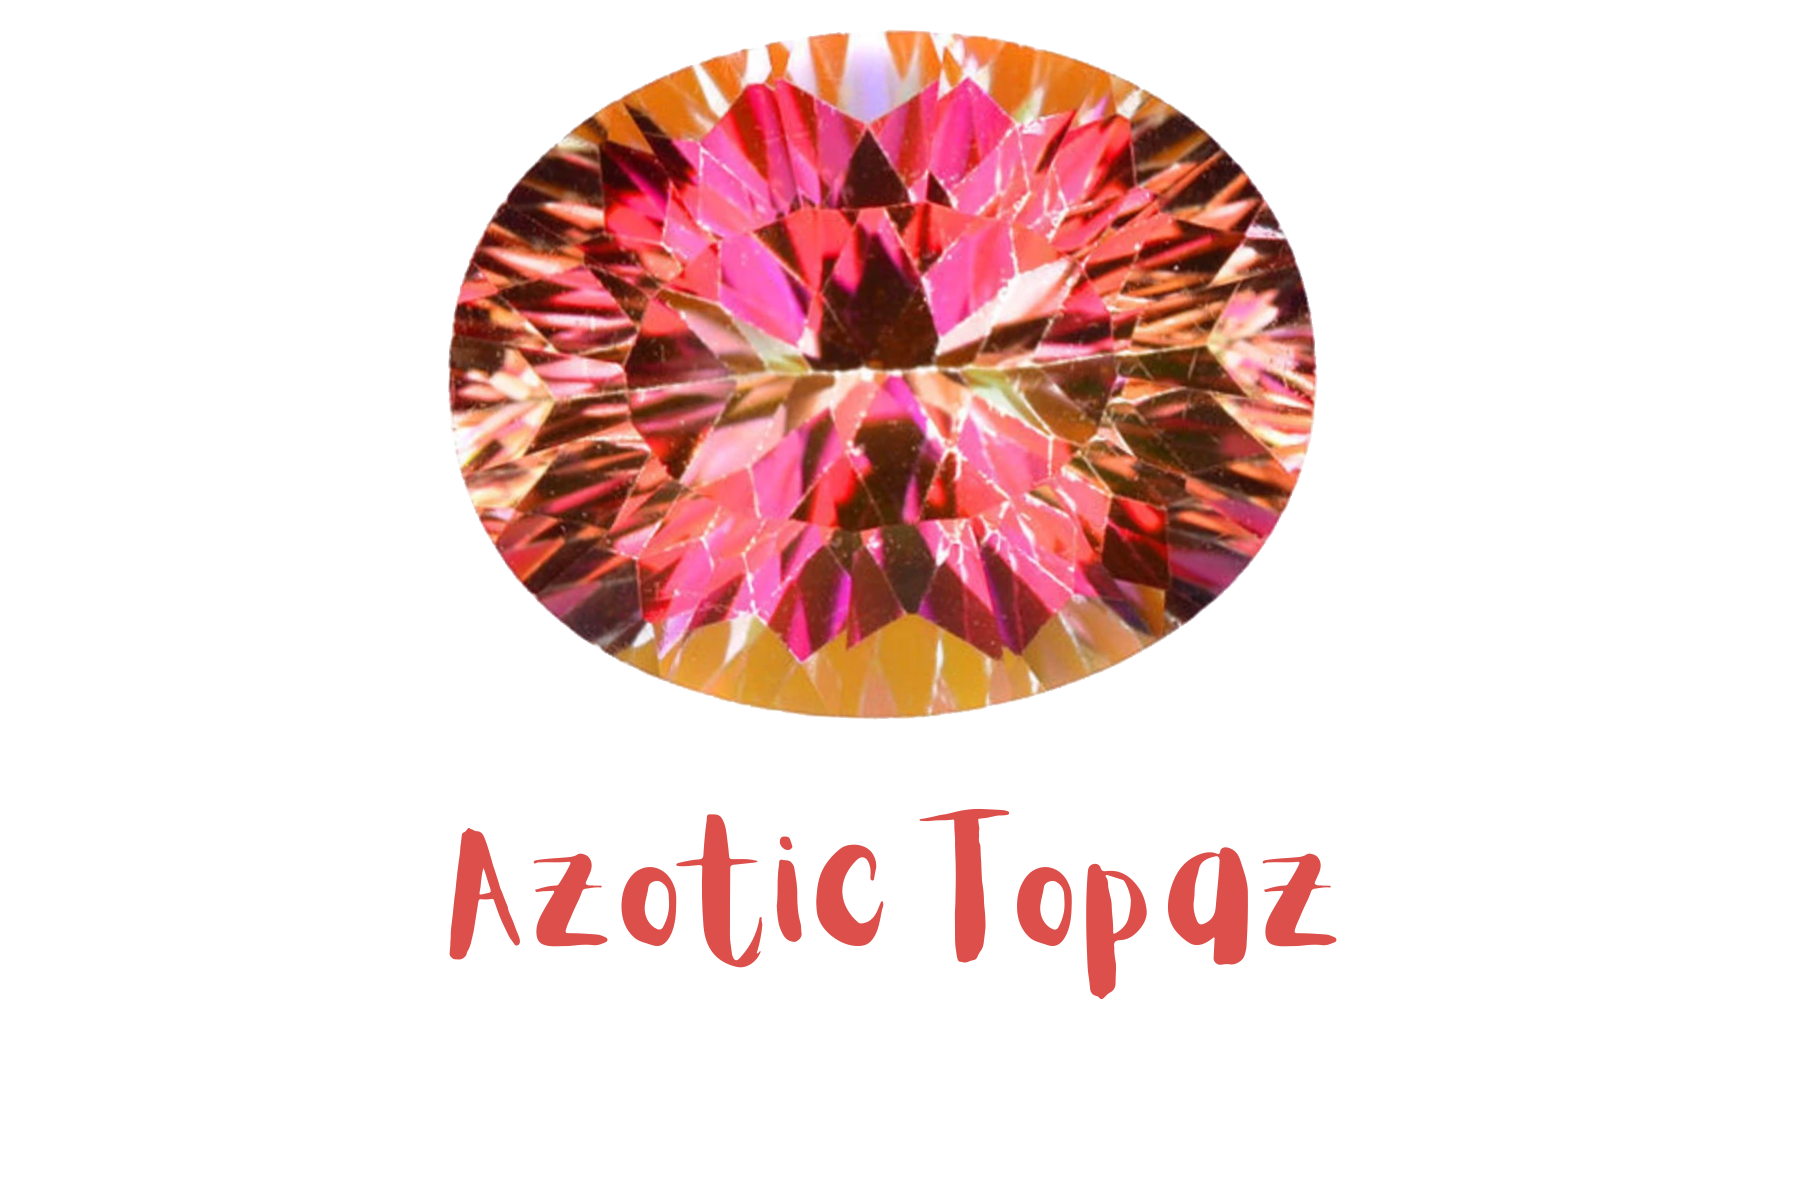 Oblong orange-pink azotic topaz